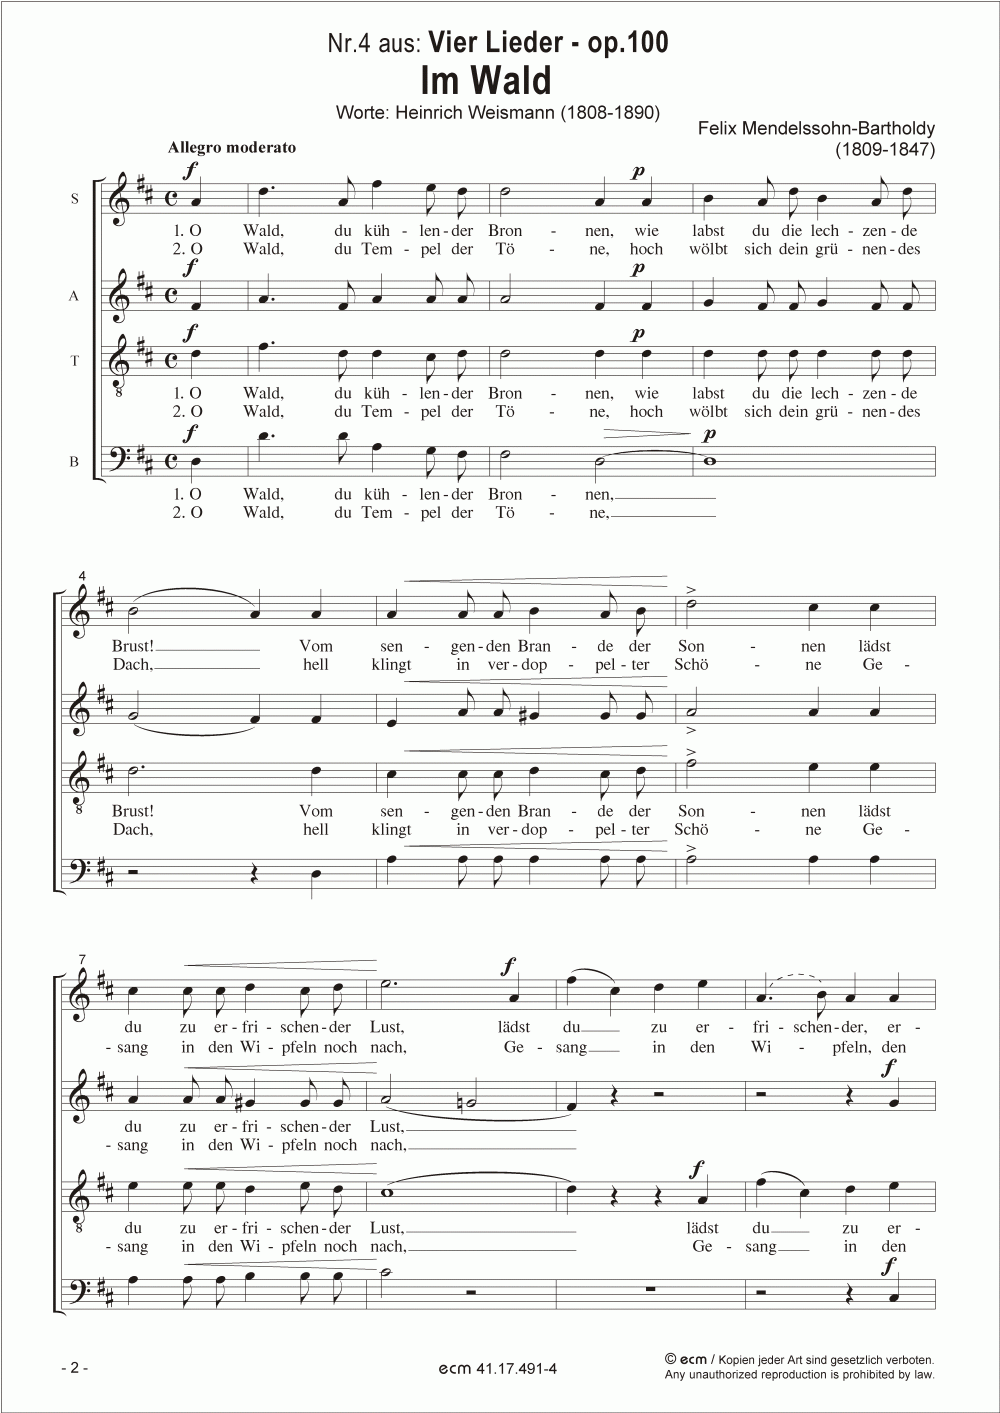 Im Wald (op.100, Nr.4)